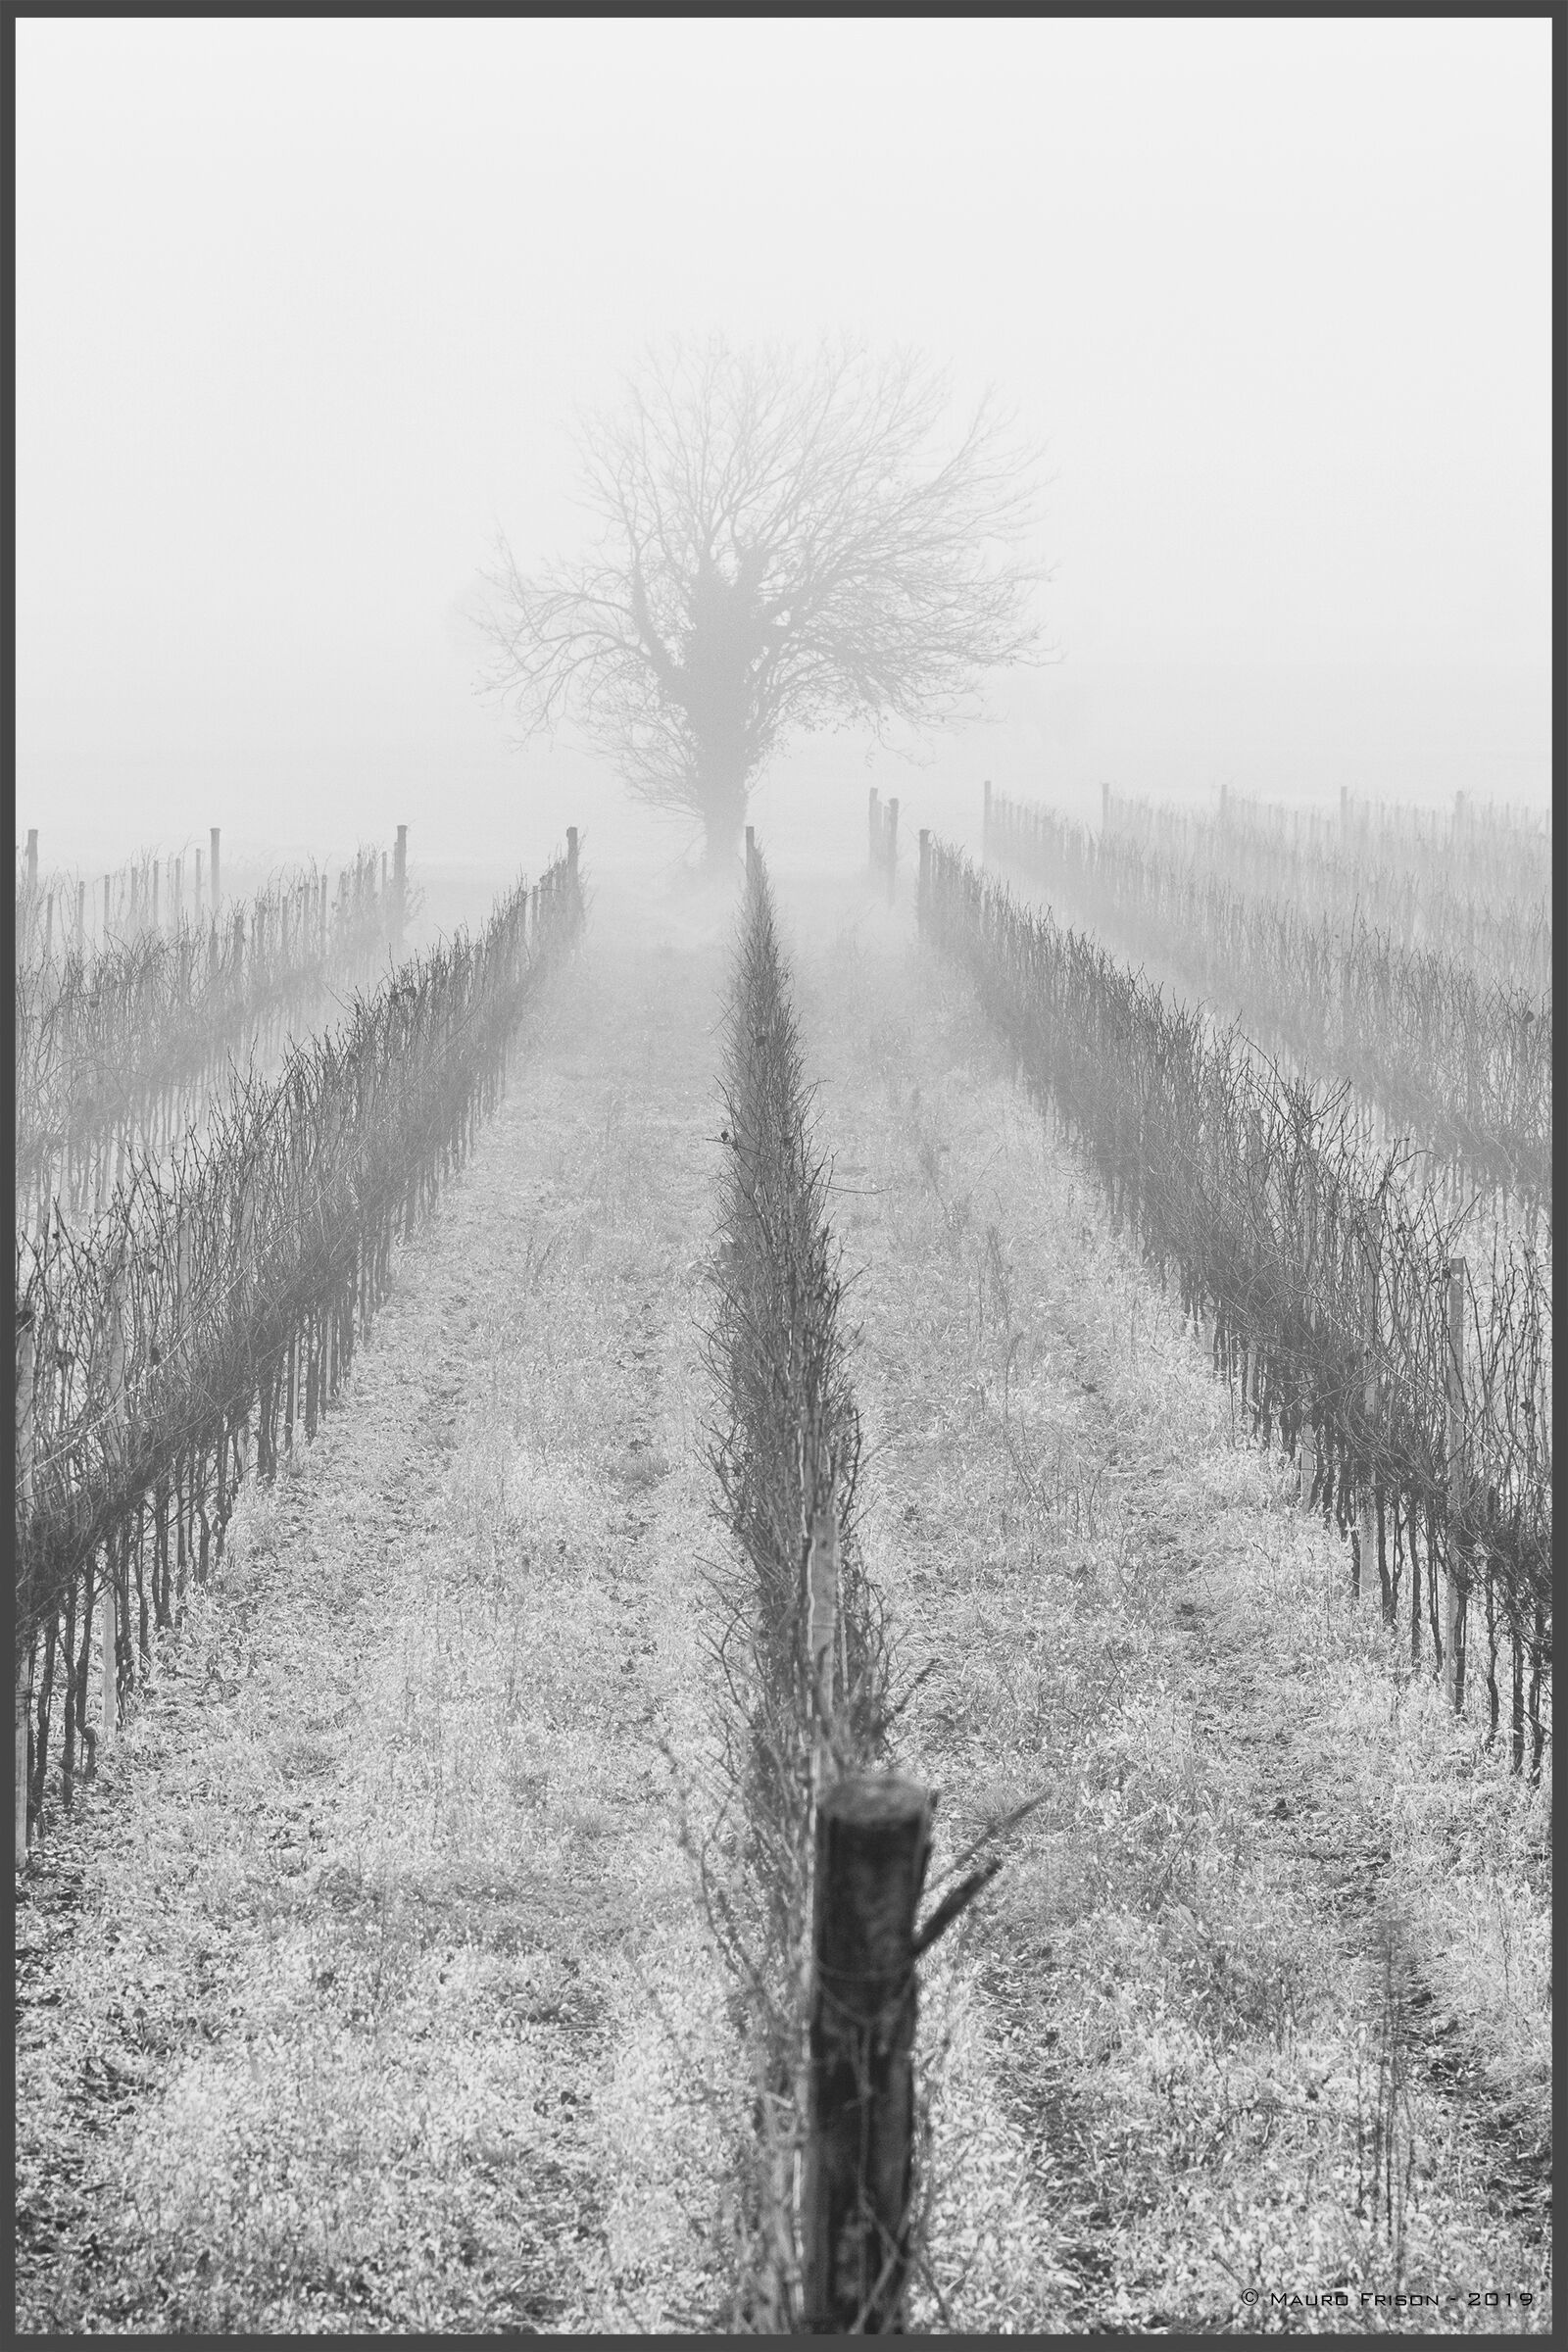 Guarding the vineyard...